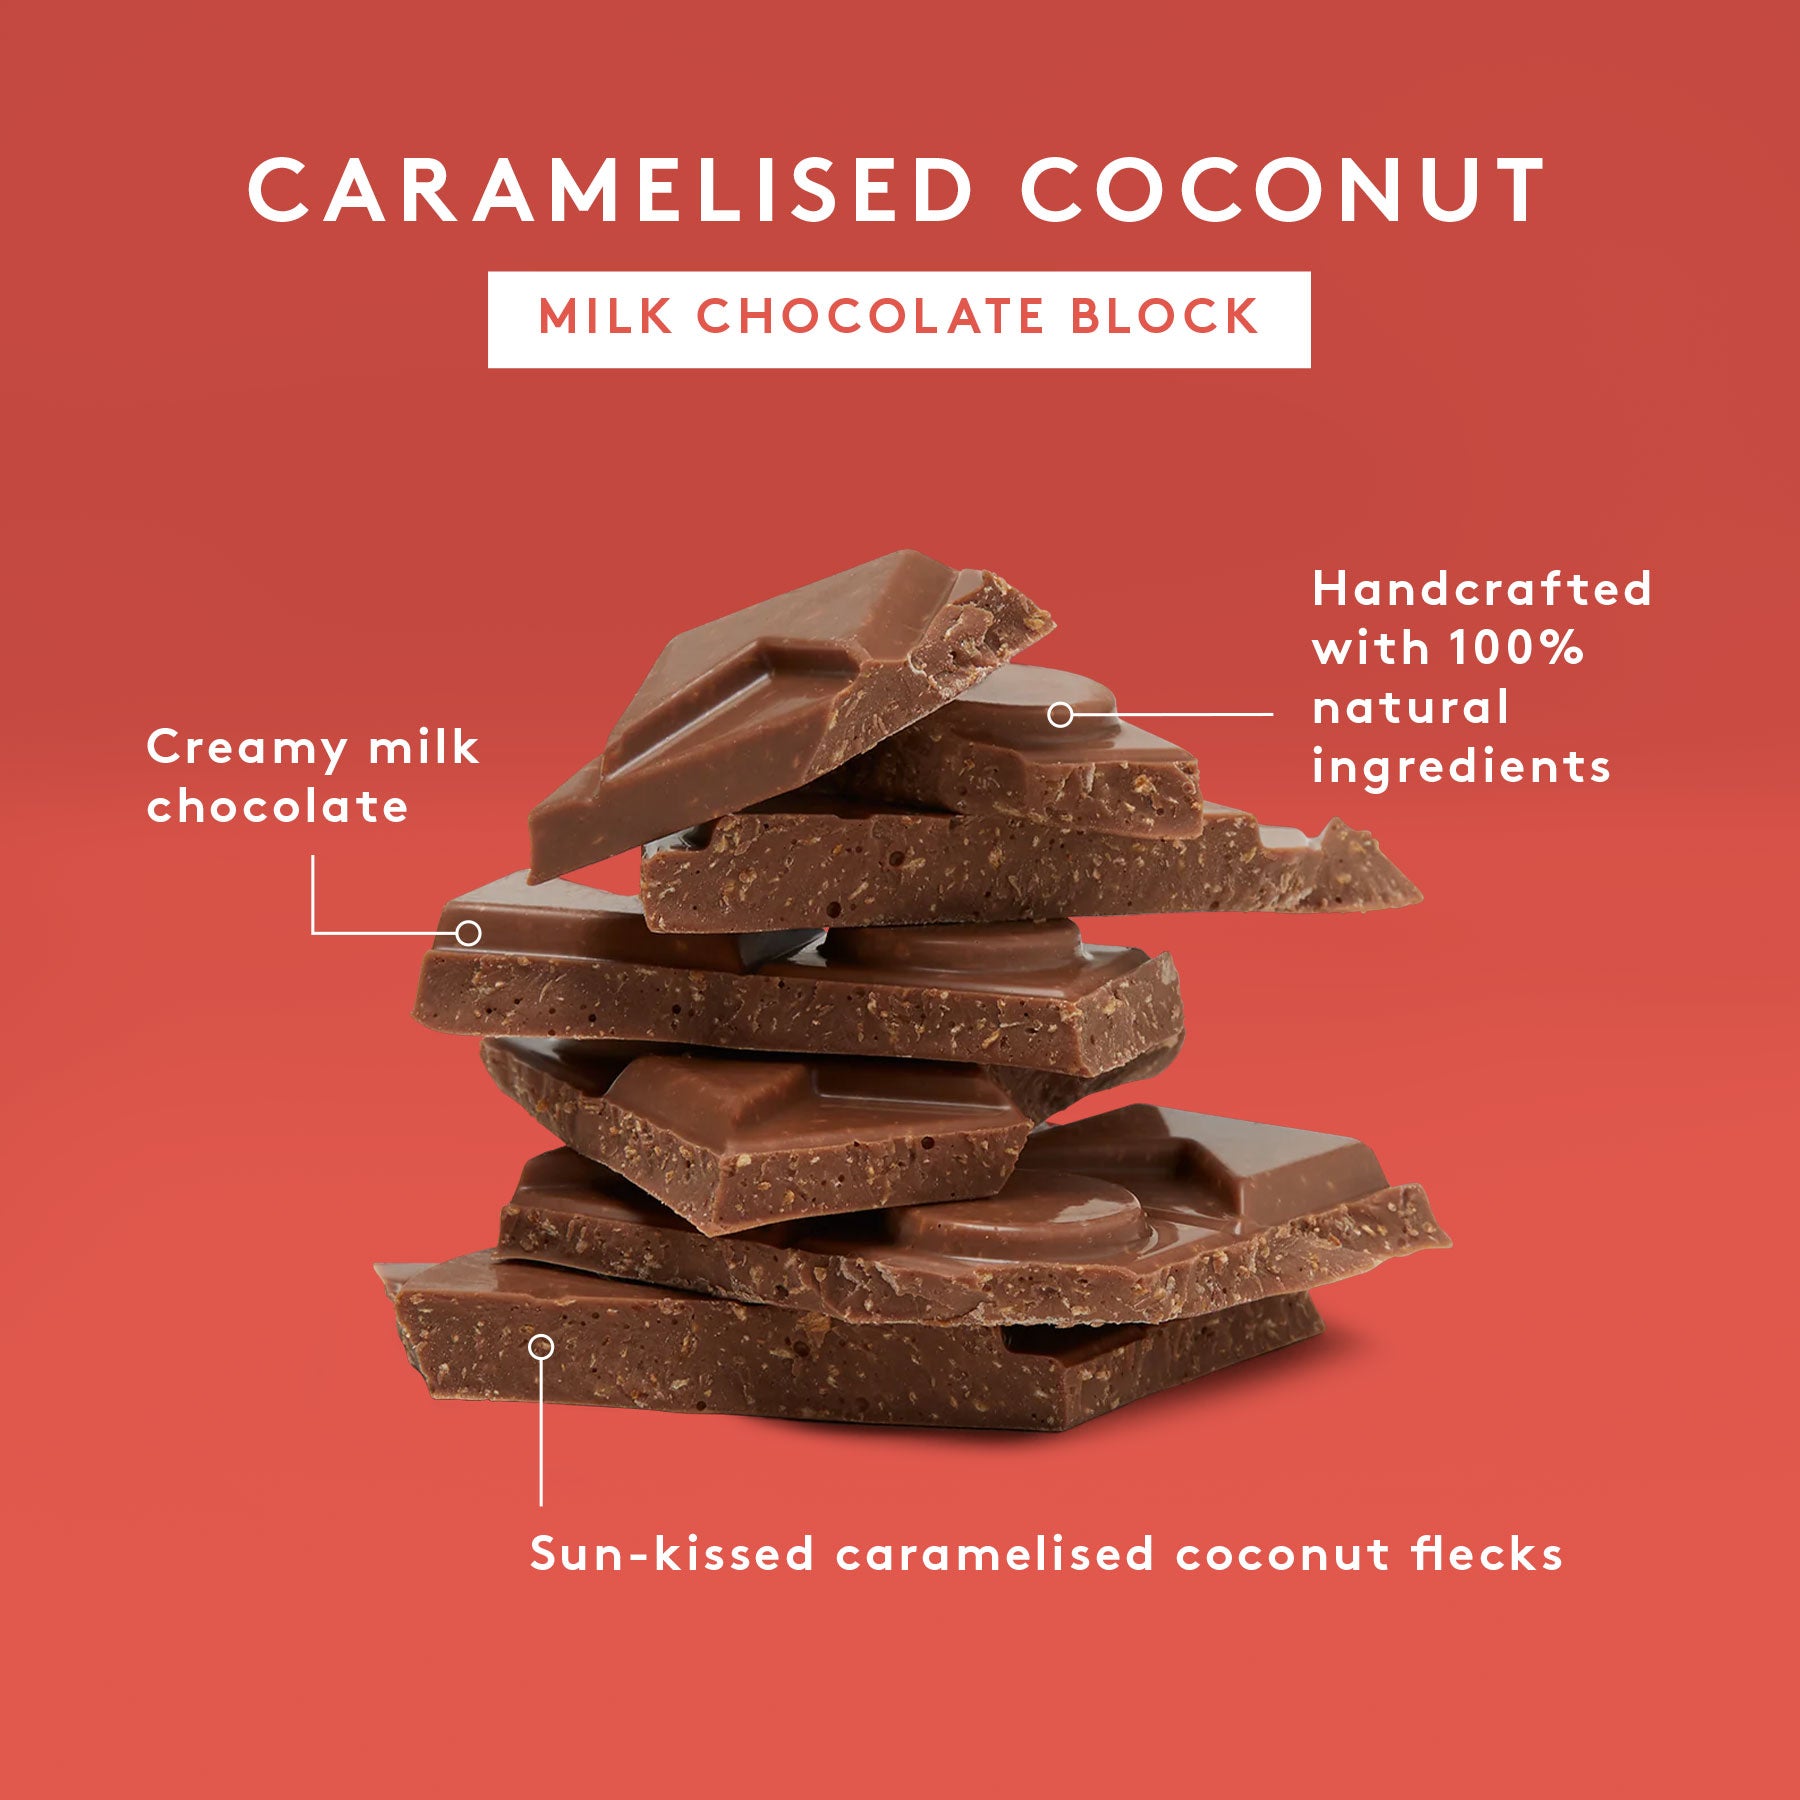 Caramelised Coconut | Milk Chocolate Block